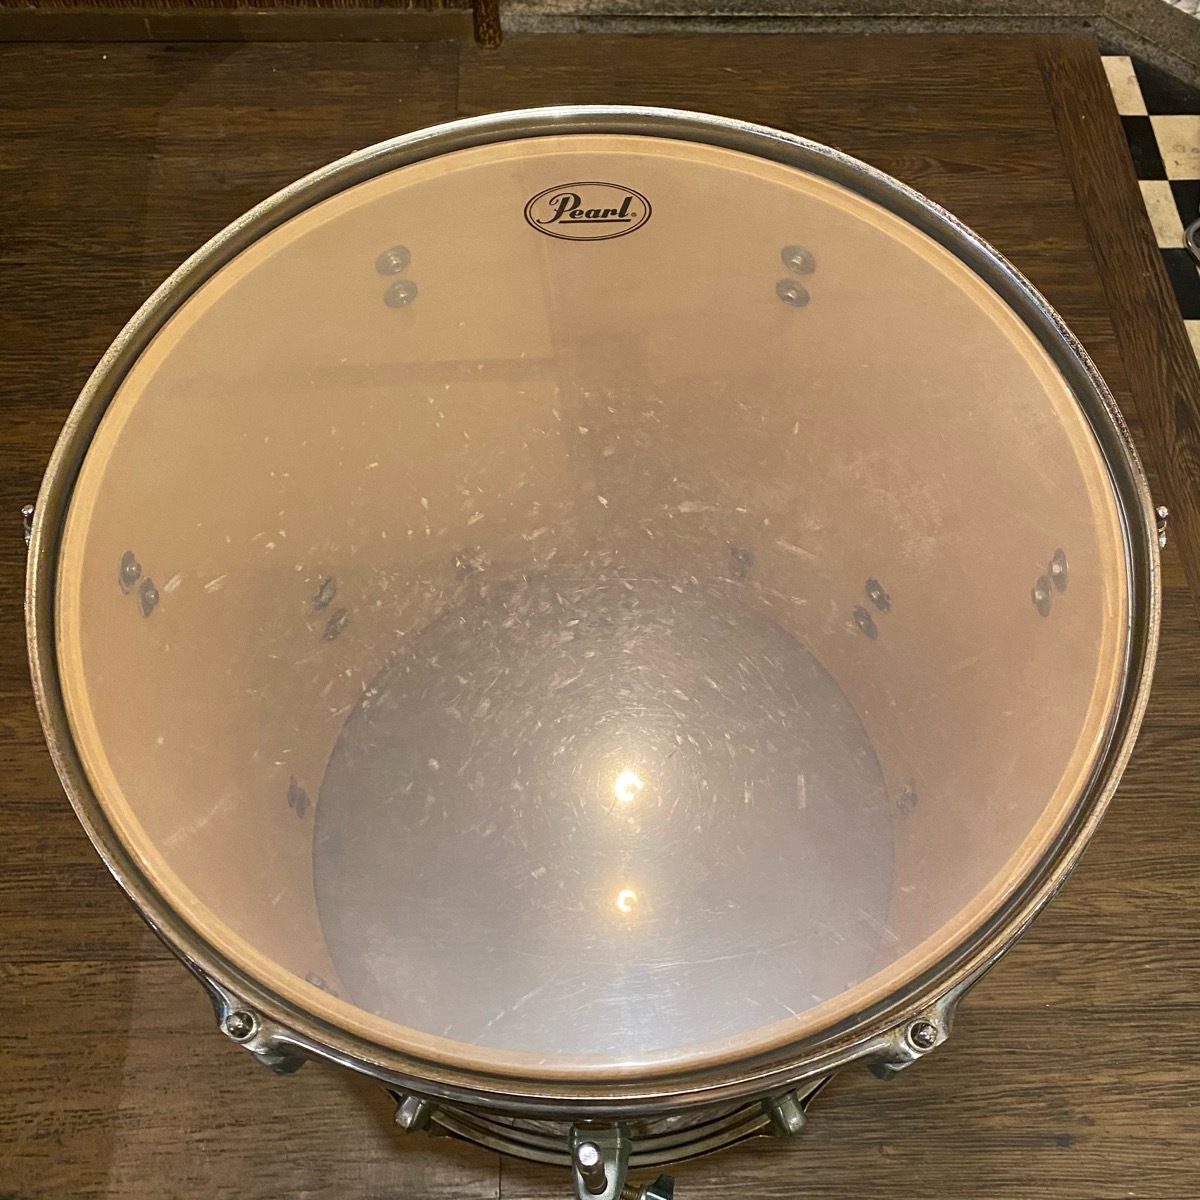 Pearl жемчуг FORUM series floor tom барабан 16×16 дюймовый -GRUN SOUND-h210-